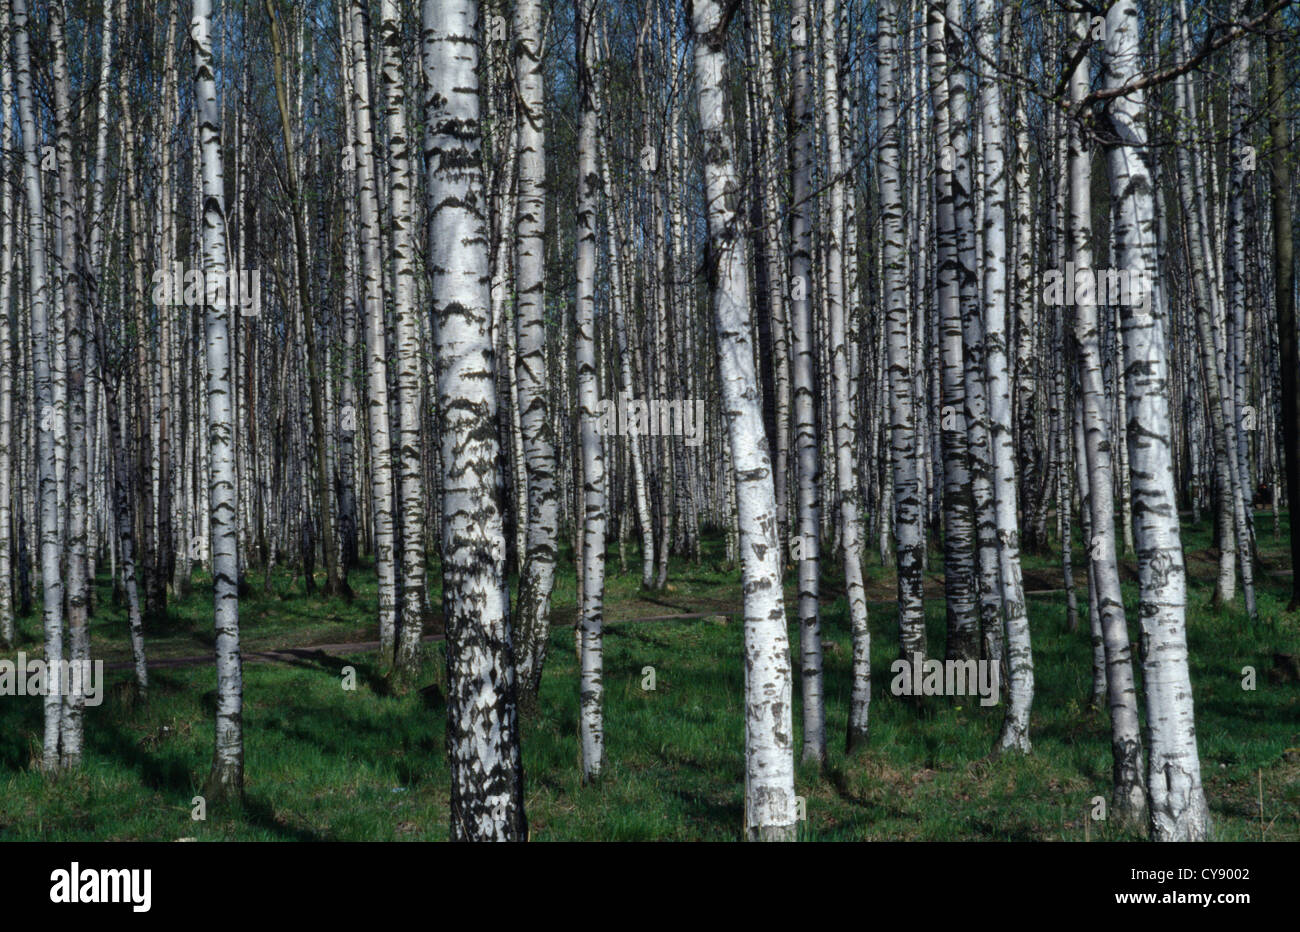 Betula pendula, Birch, Silver birch, Full frame image of vertical ...